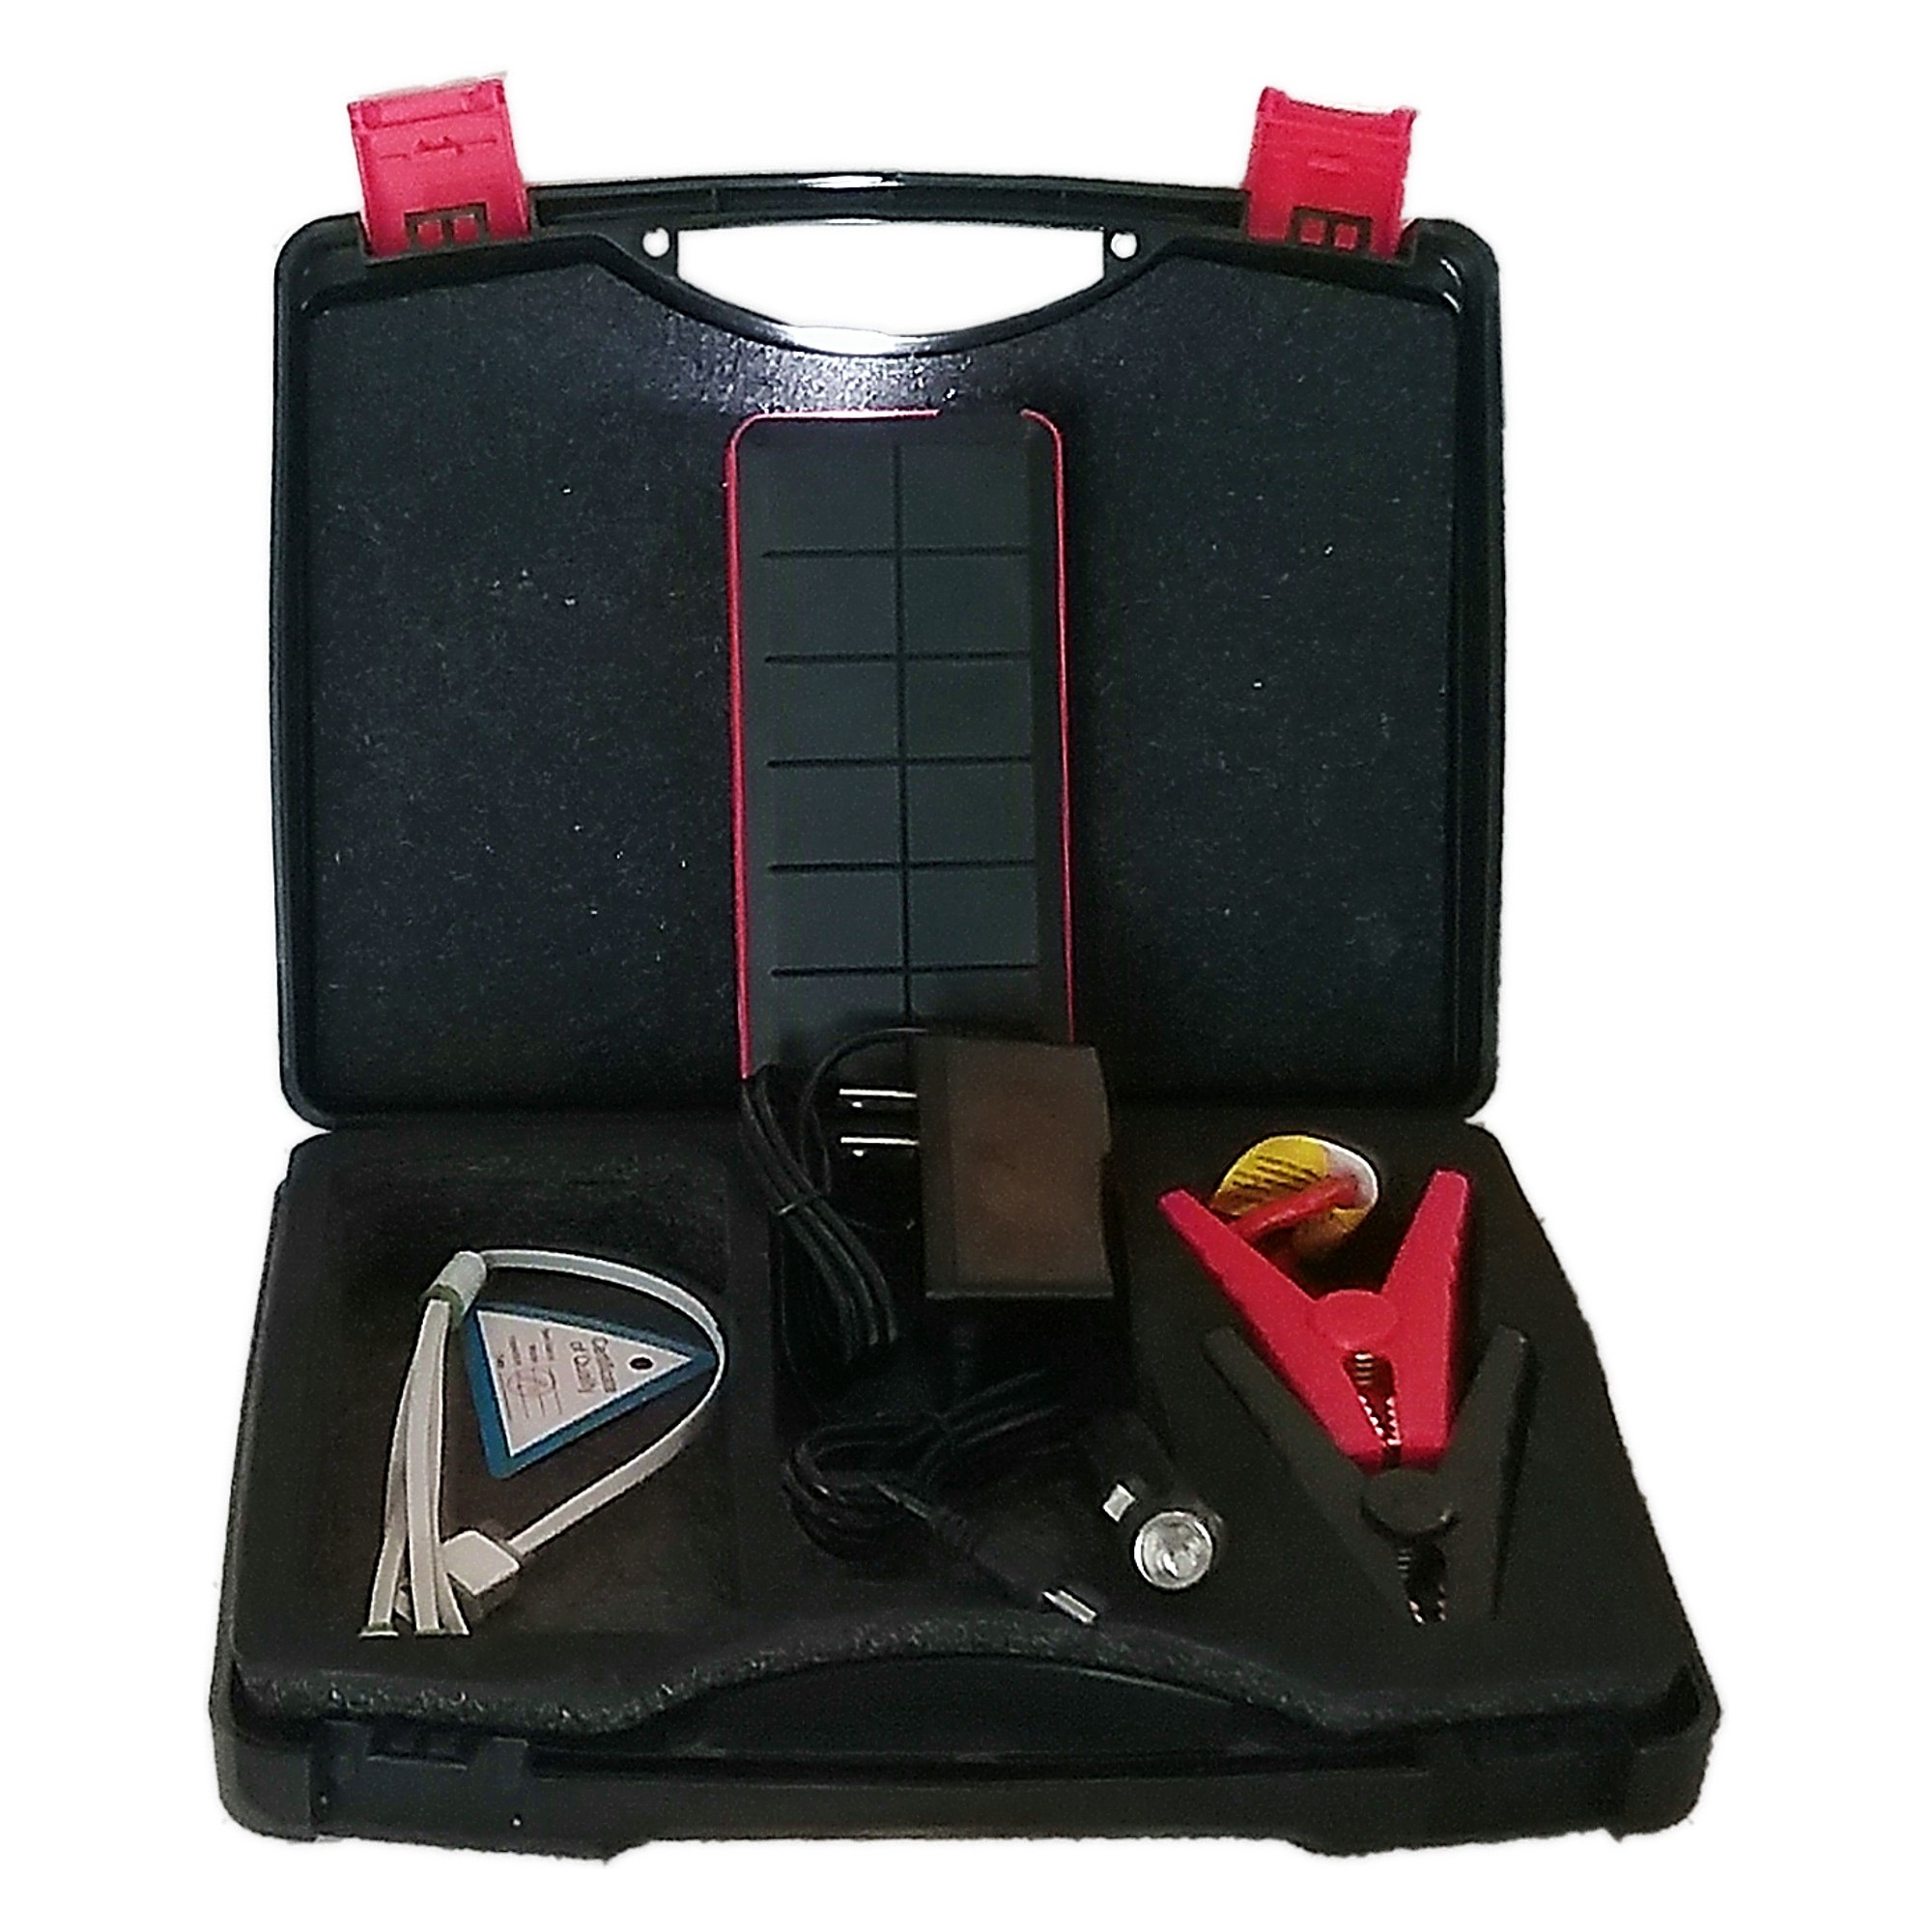 https://manateemax.com/auto-rv/auto-rv-accessories/apollo-energy-micro-power-pack-500-12v-portable-multi-function-emergency-jump-starter/